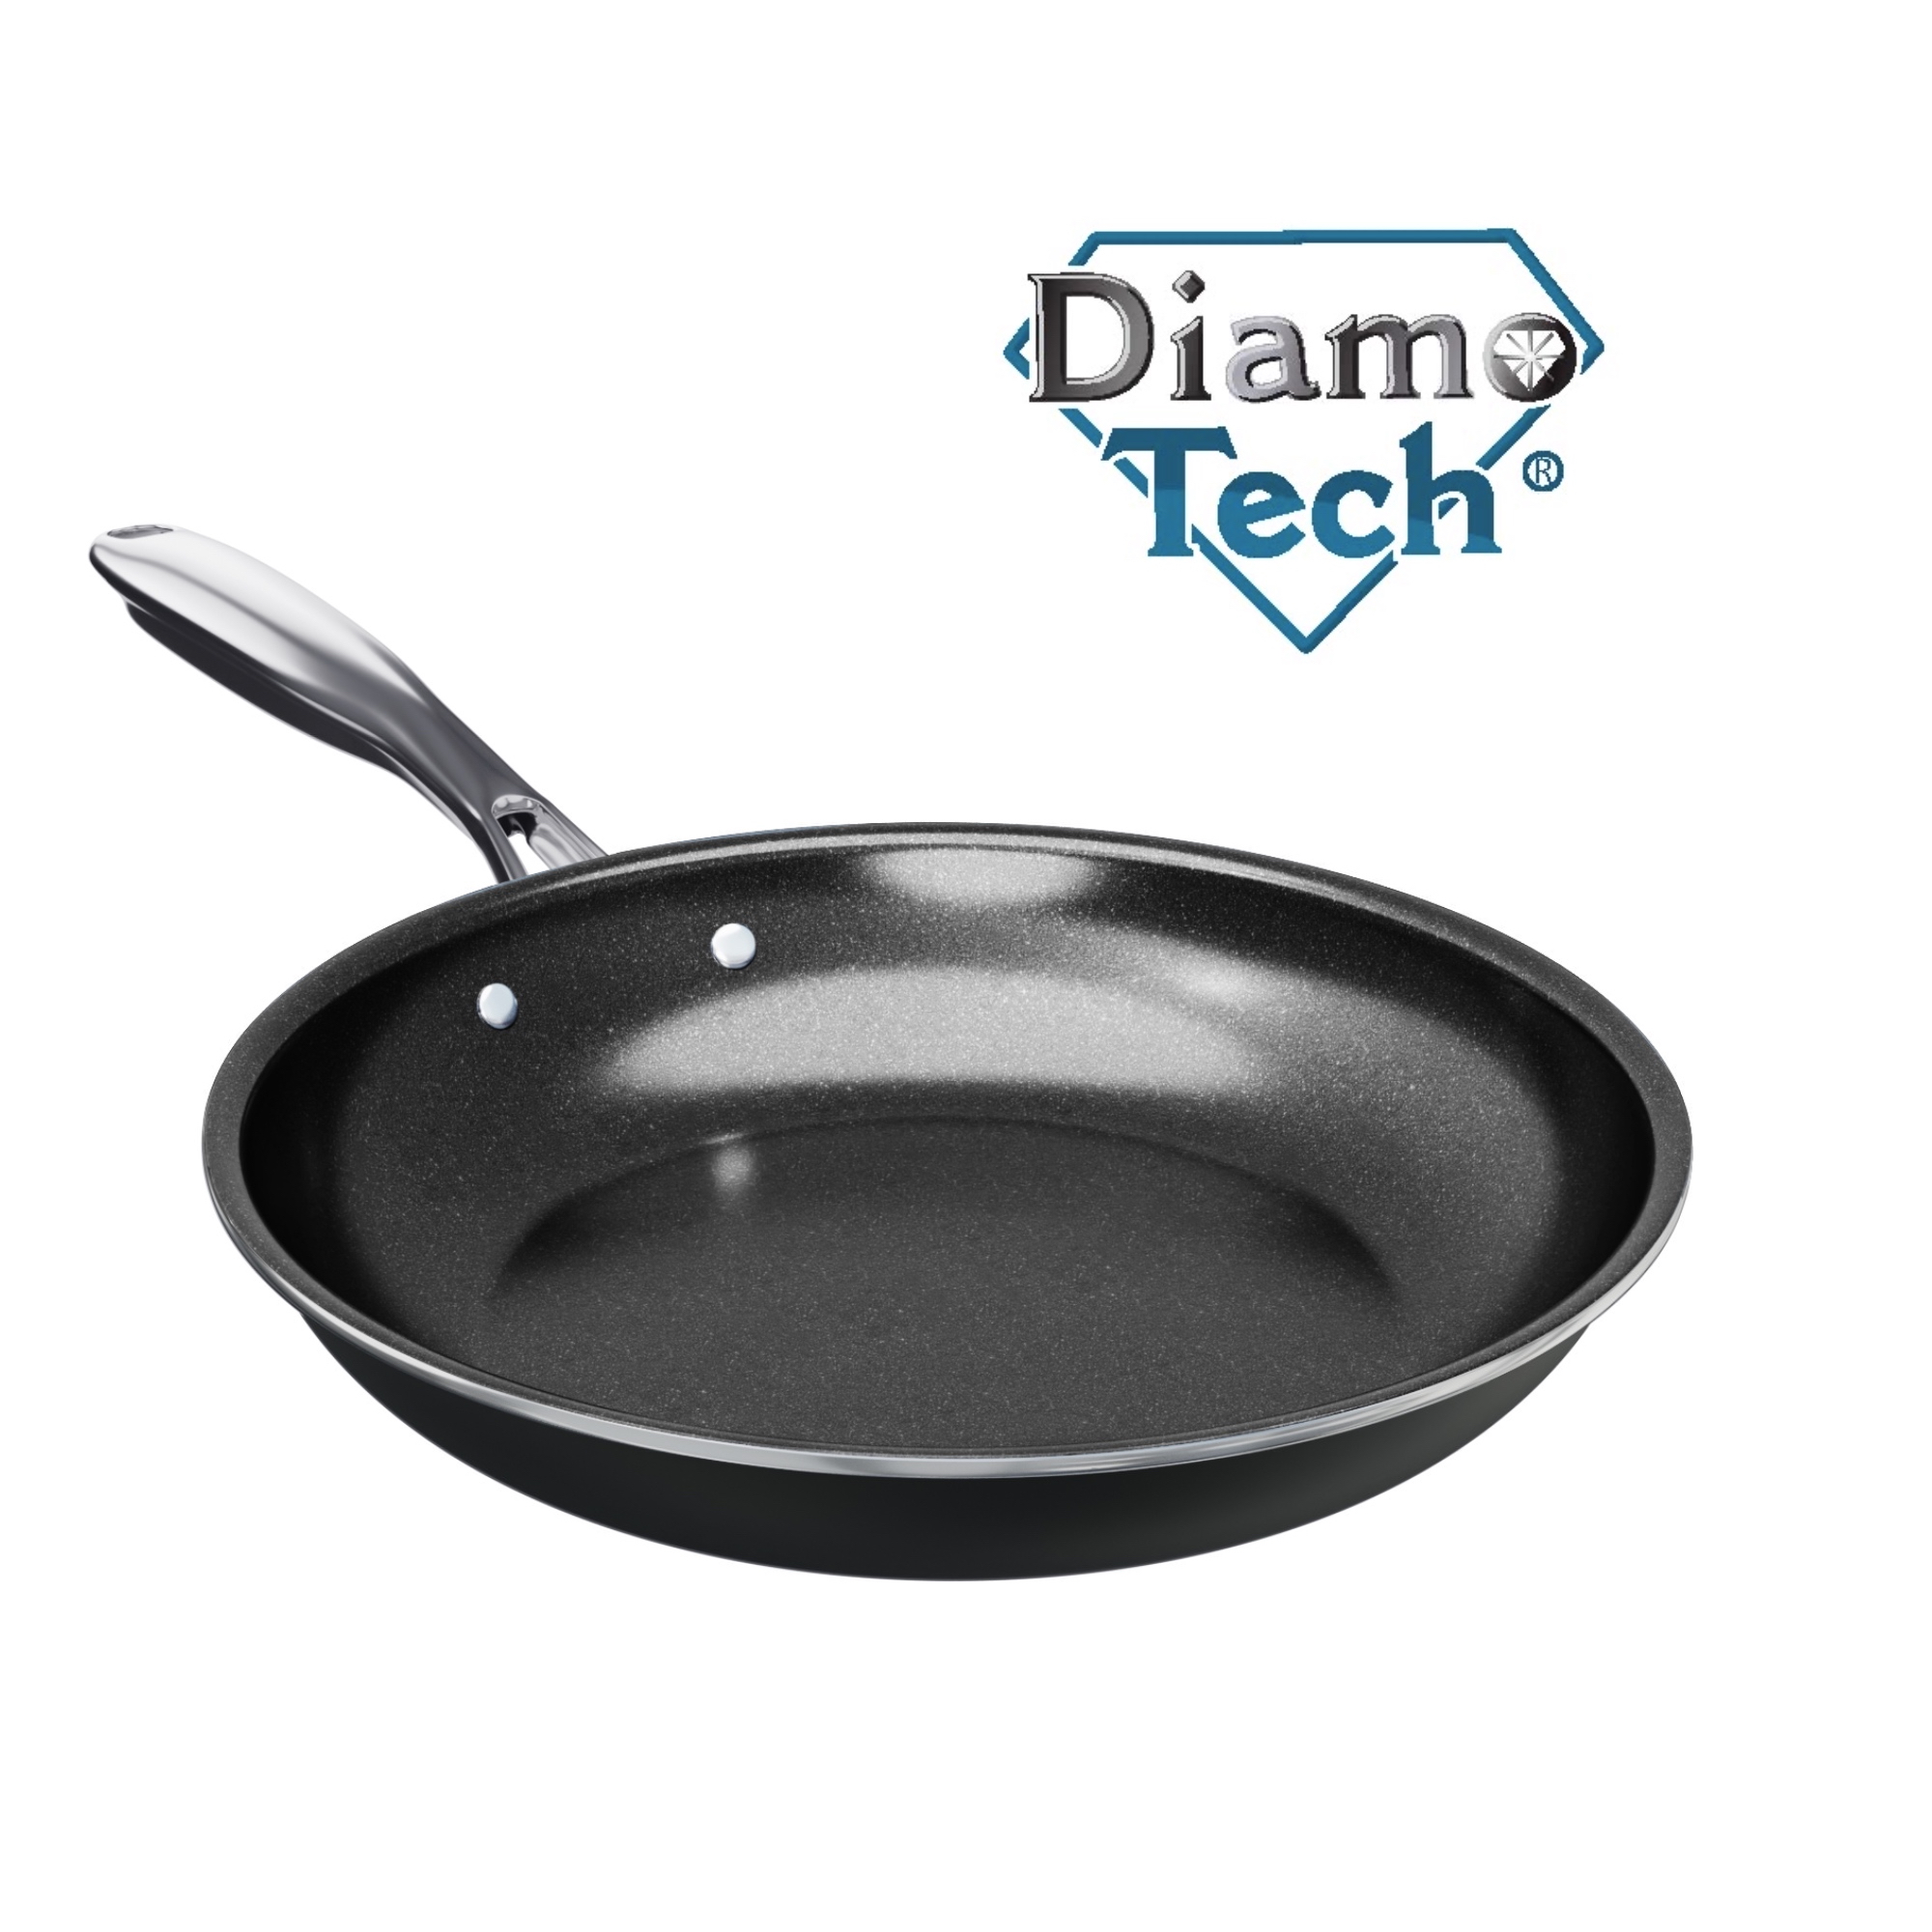 DiamoTech Toxin Free Ceramic Metal Utensil Oven Safe, 9.5 inch Fry Pan/Skillet - image 5 of 8